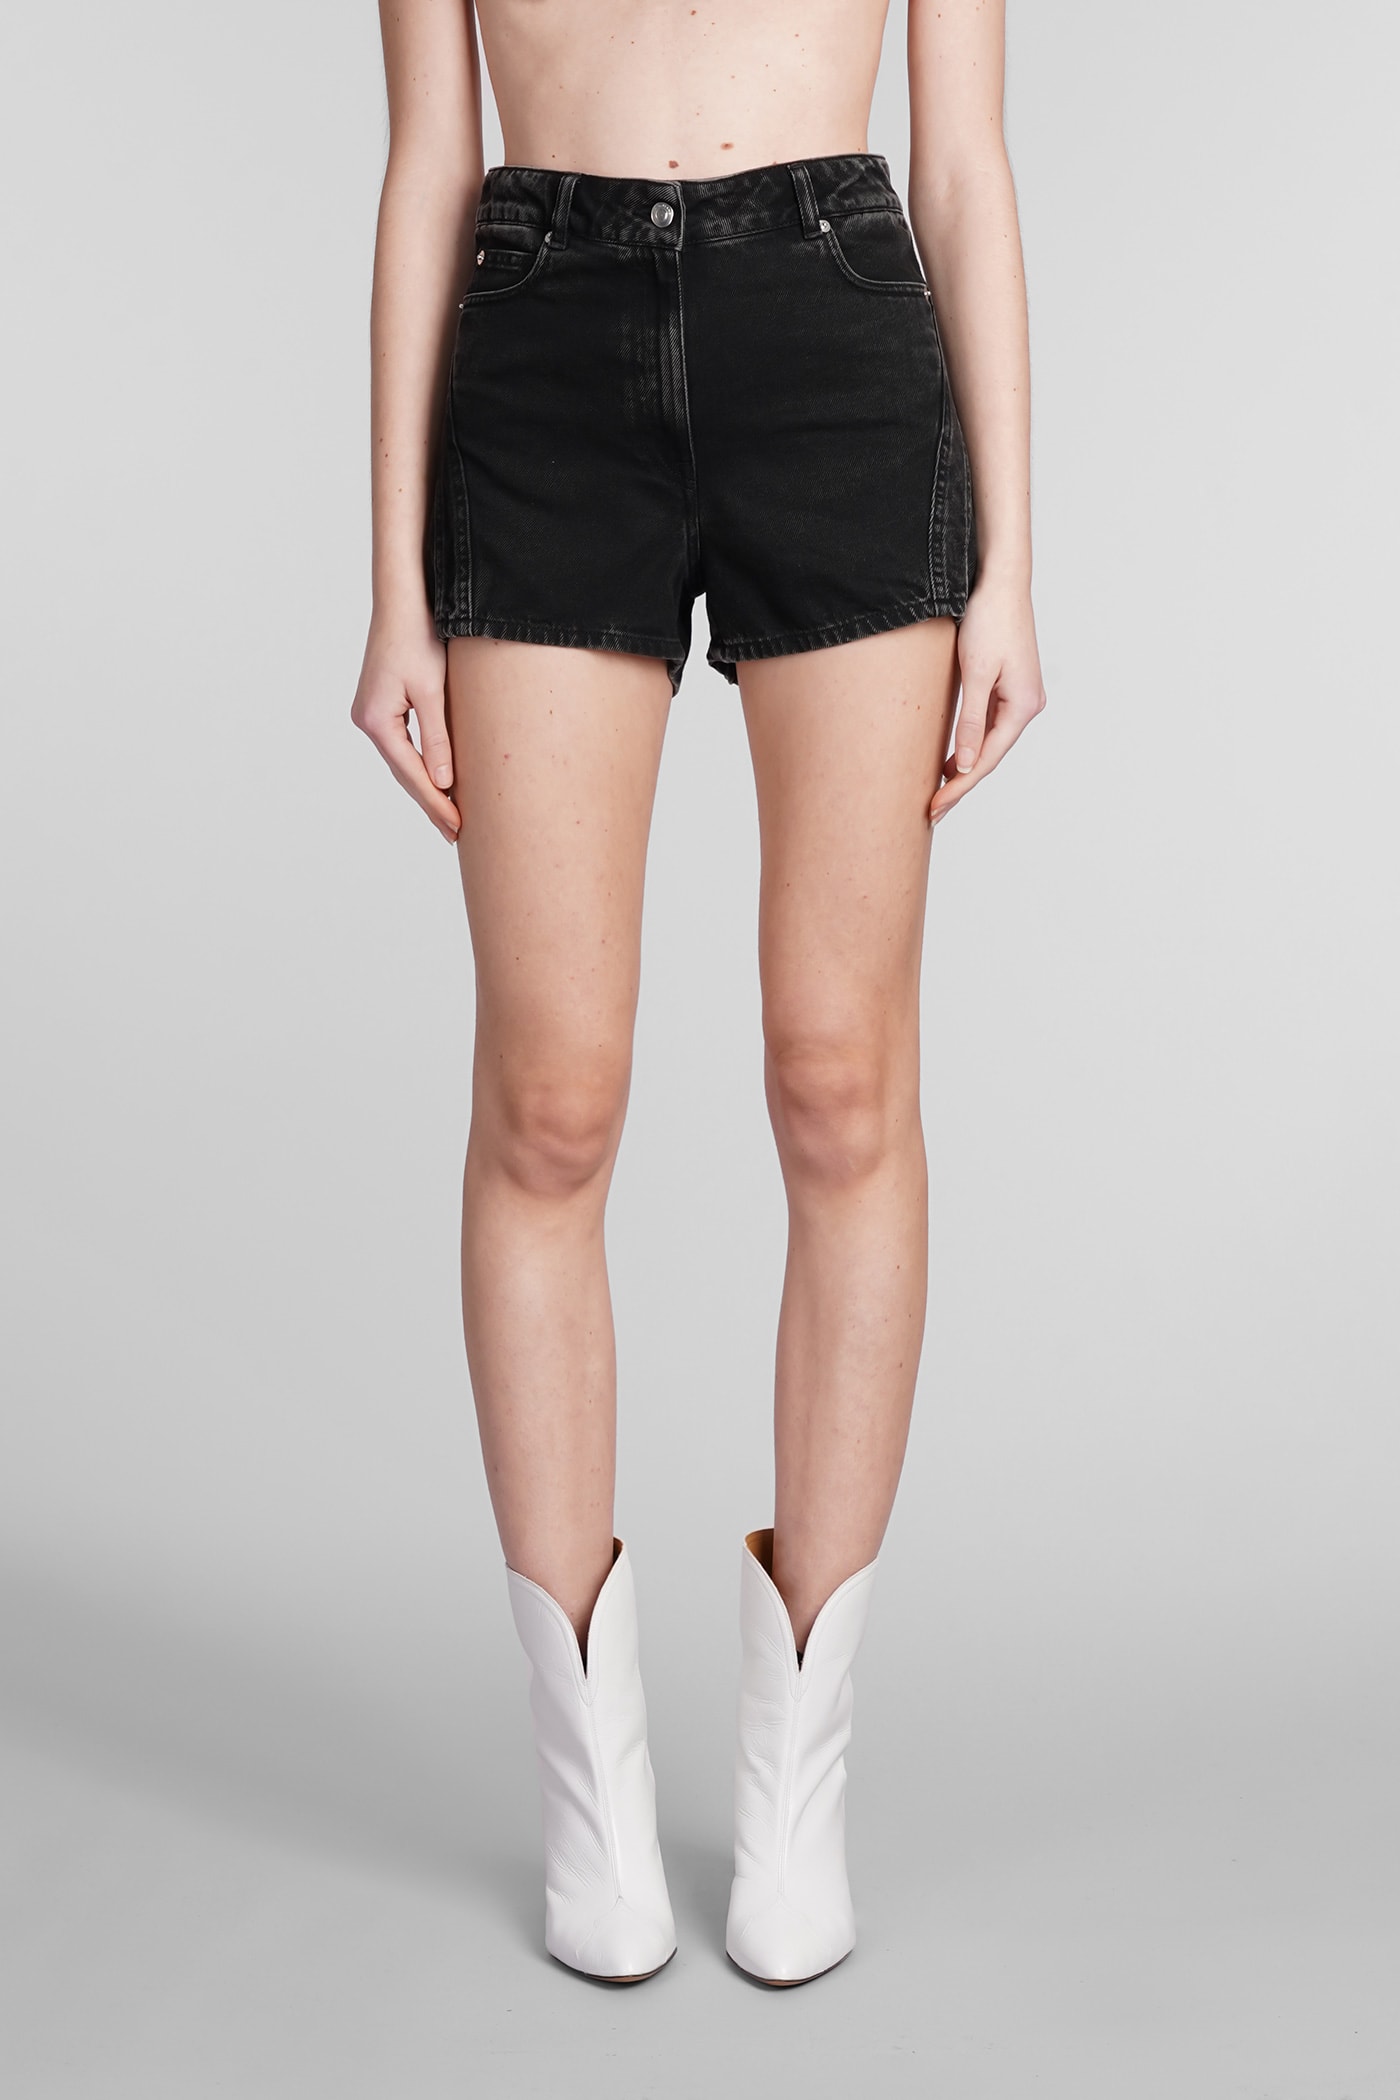 Elgama Shorts In Black Cotton